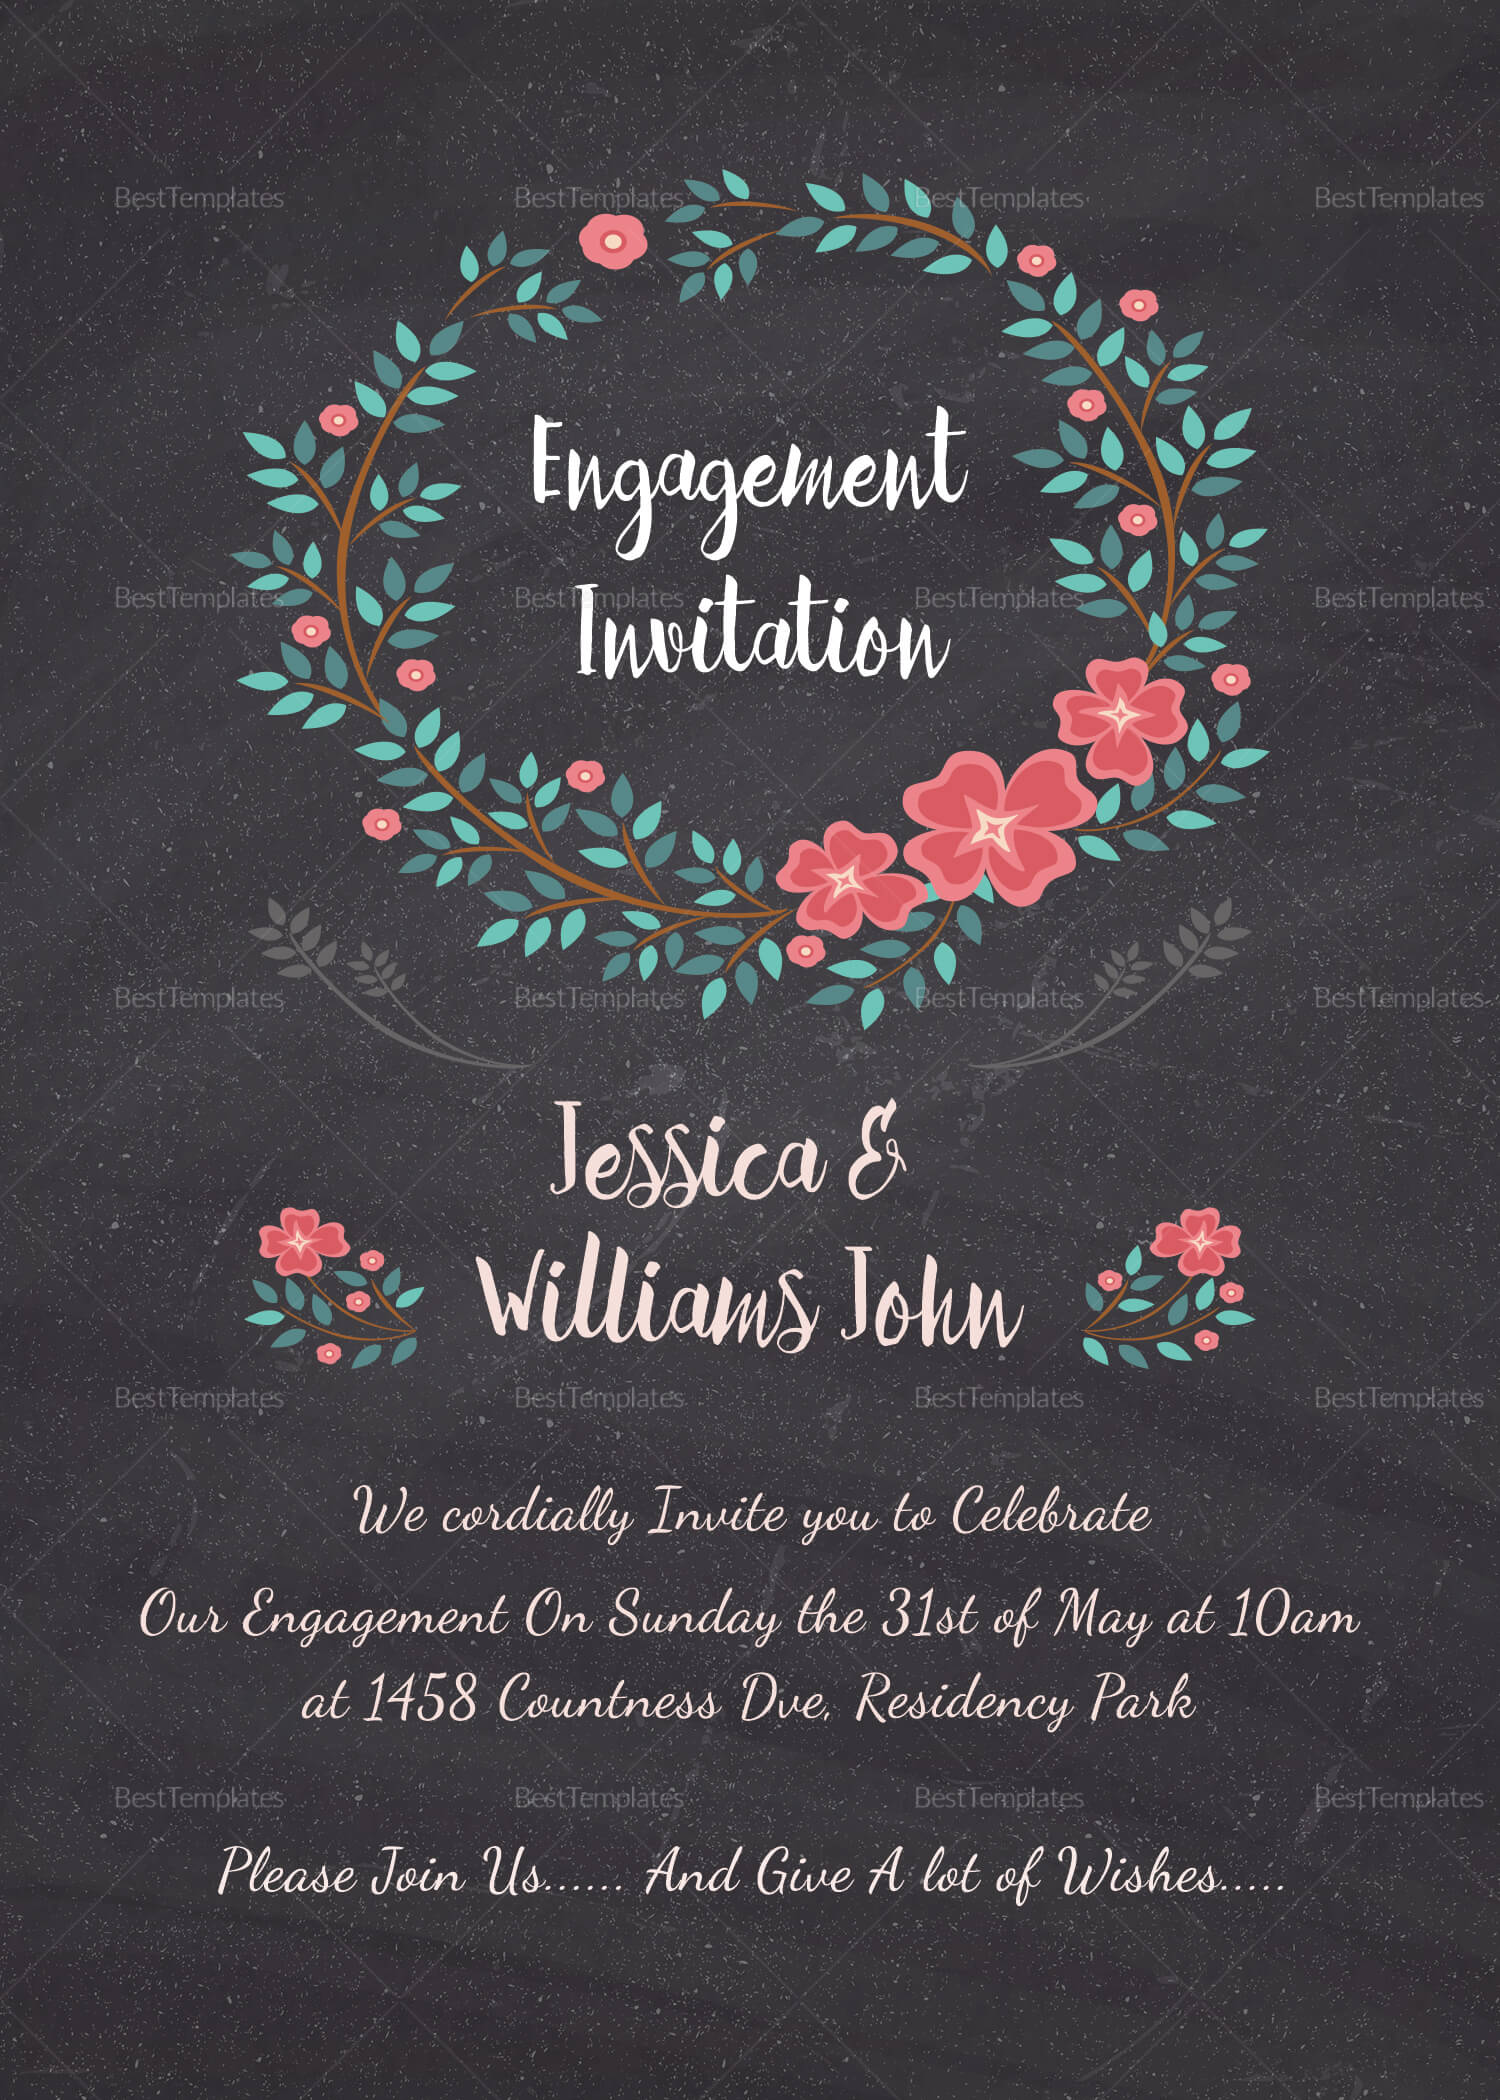 Engagement Invitation Card Template Pertaining To Engagement Invitation Card Template